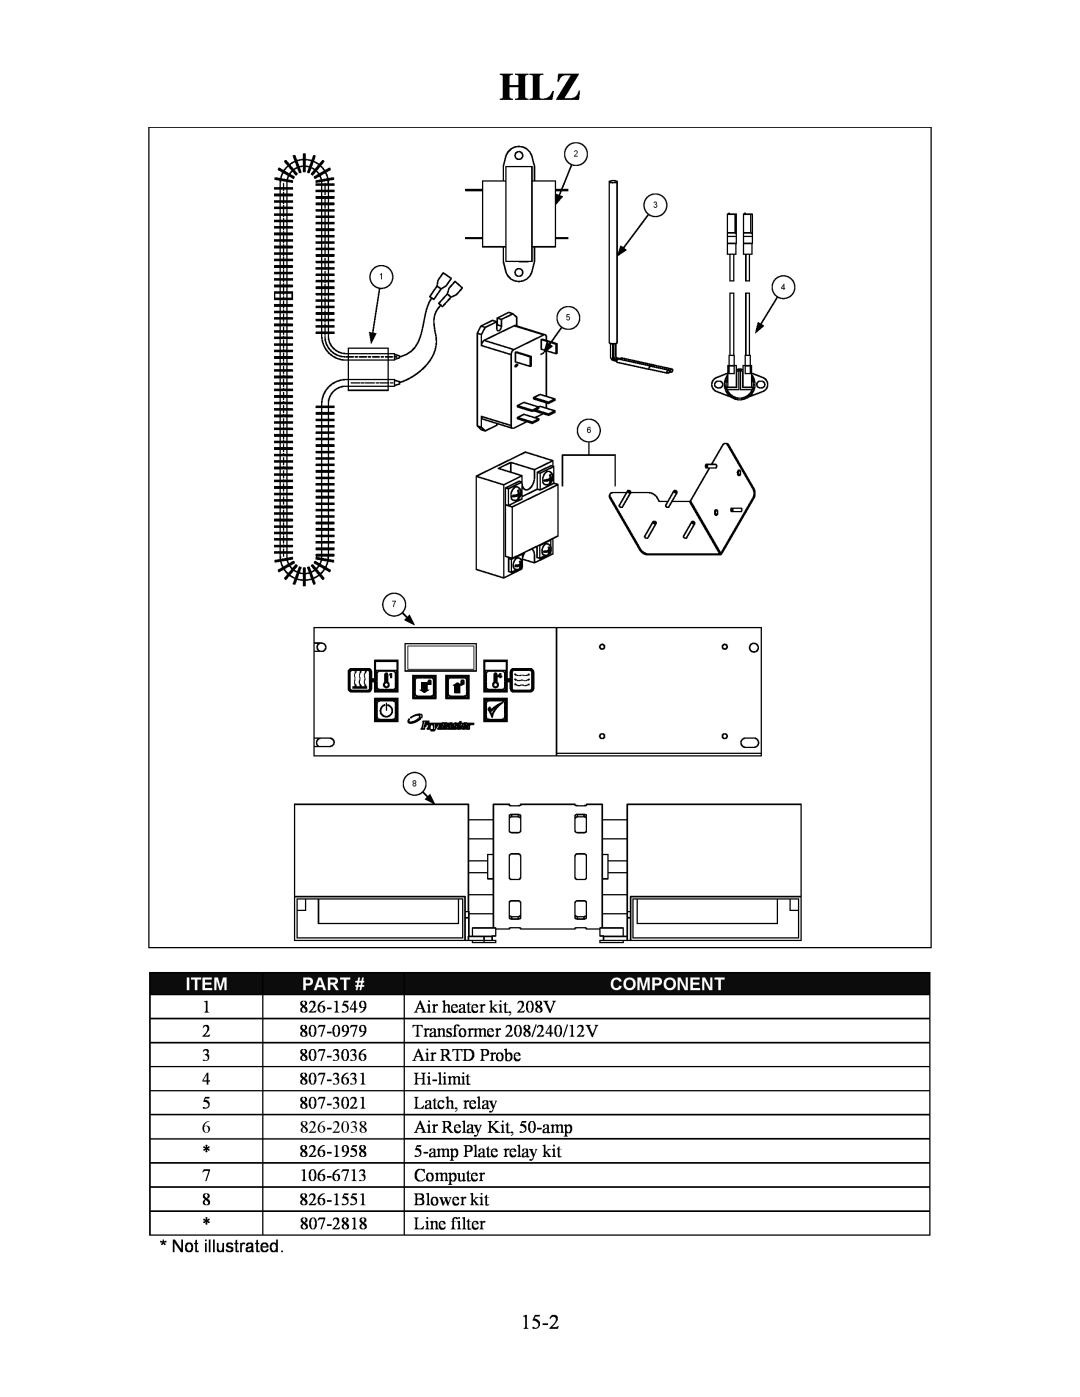 Frymaster H55 manual 15-2, Part #, Component 